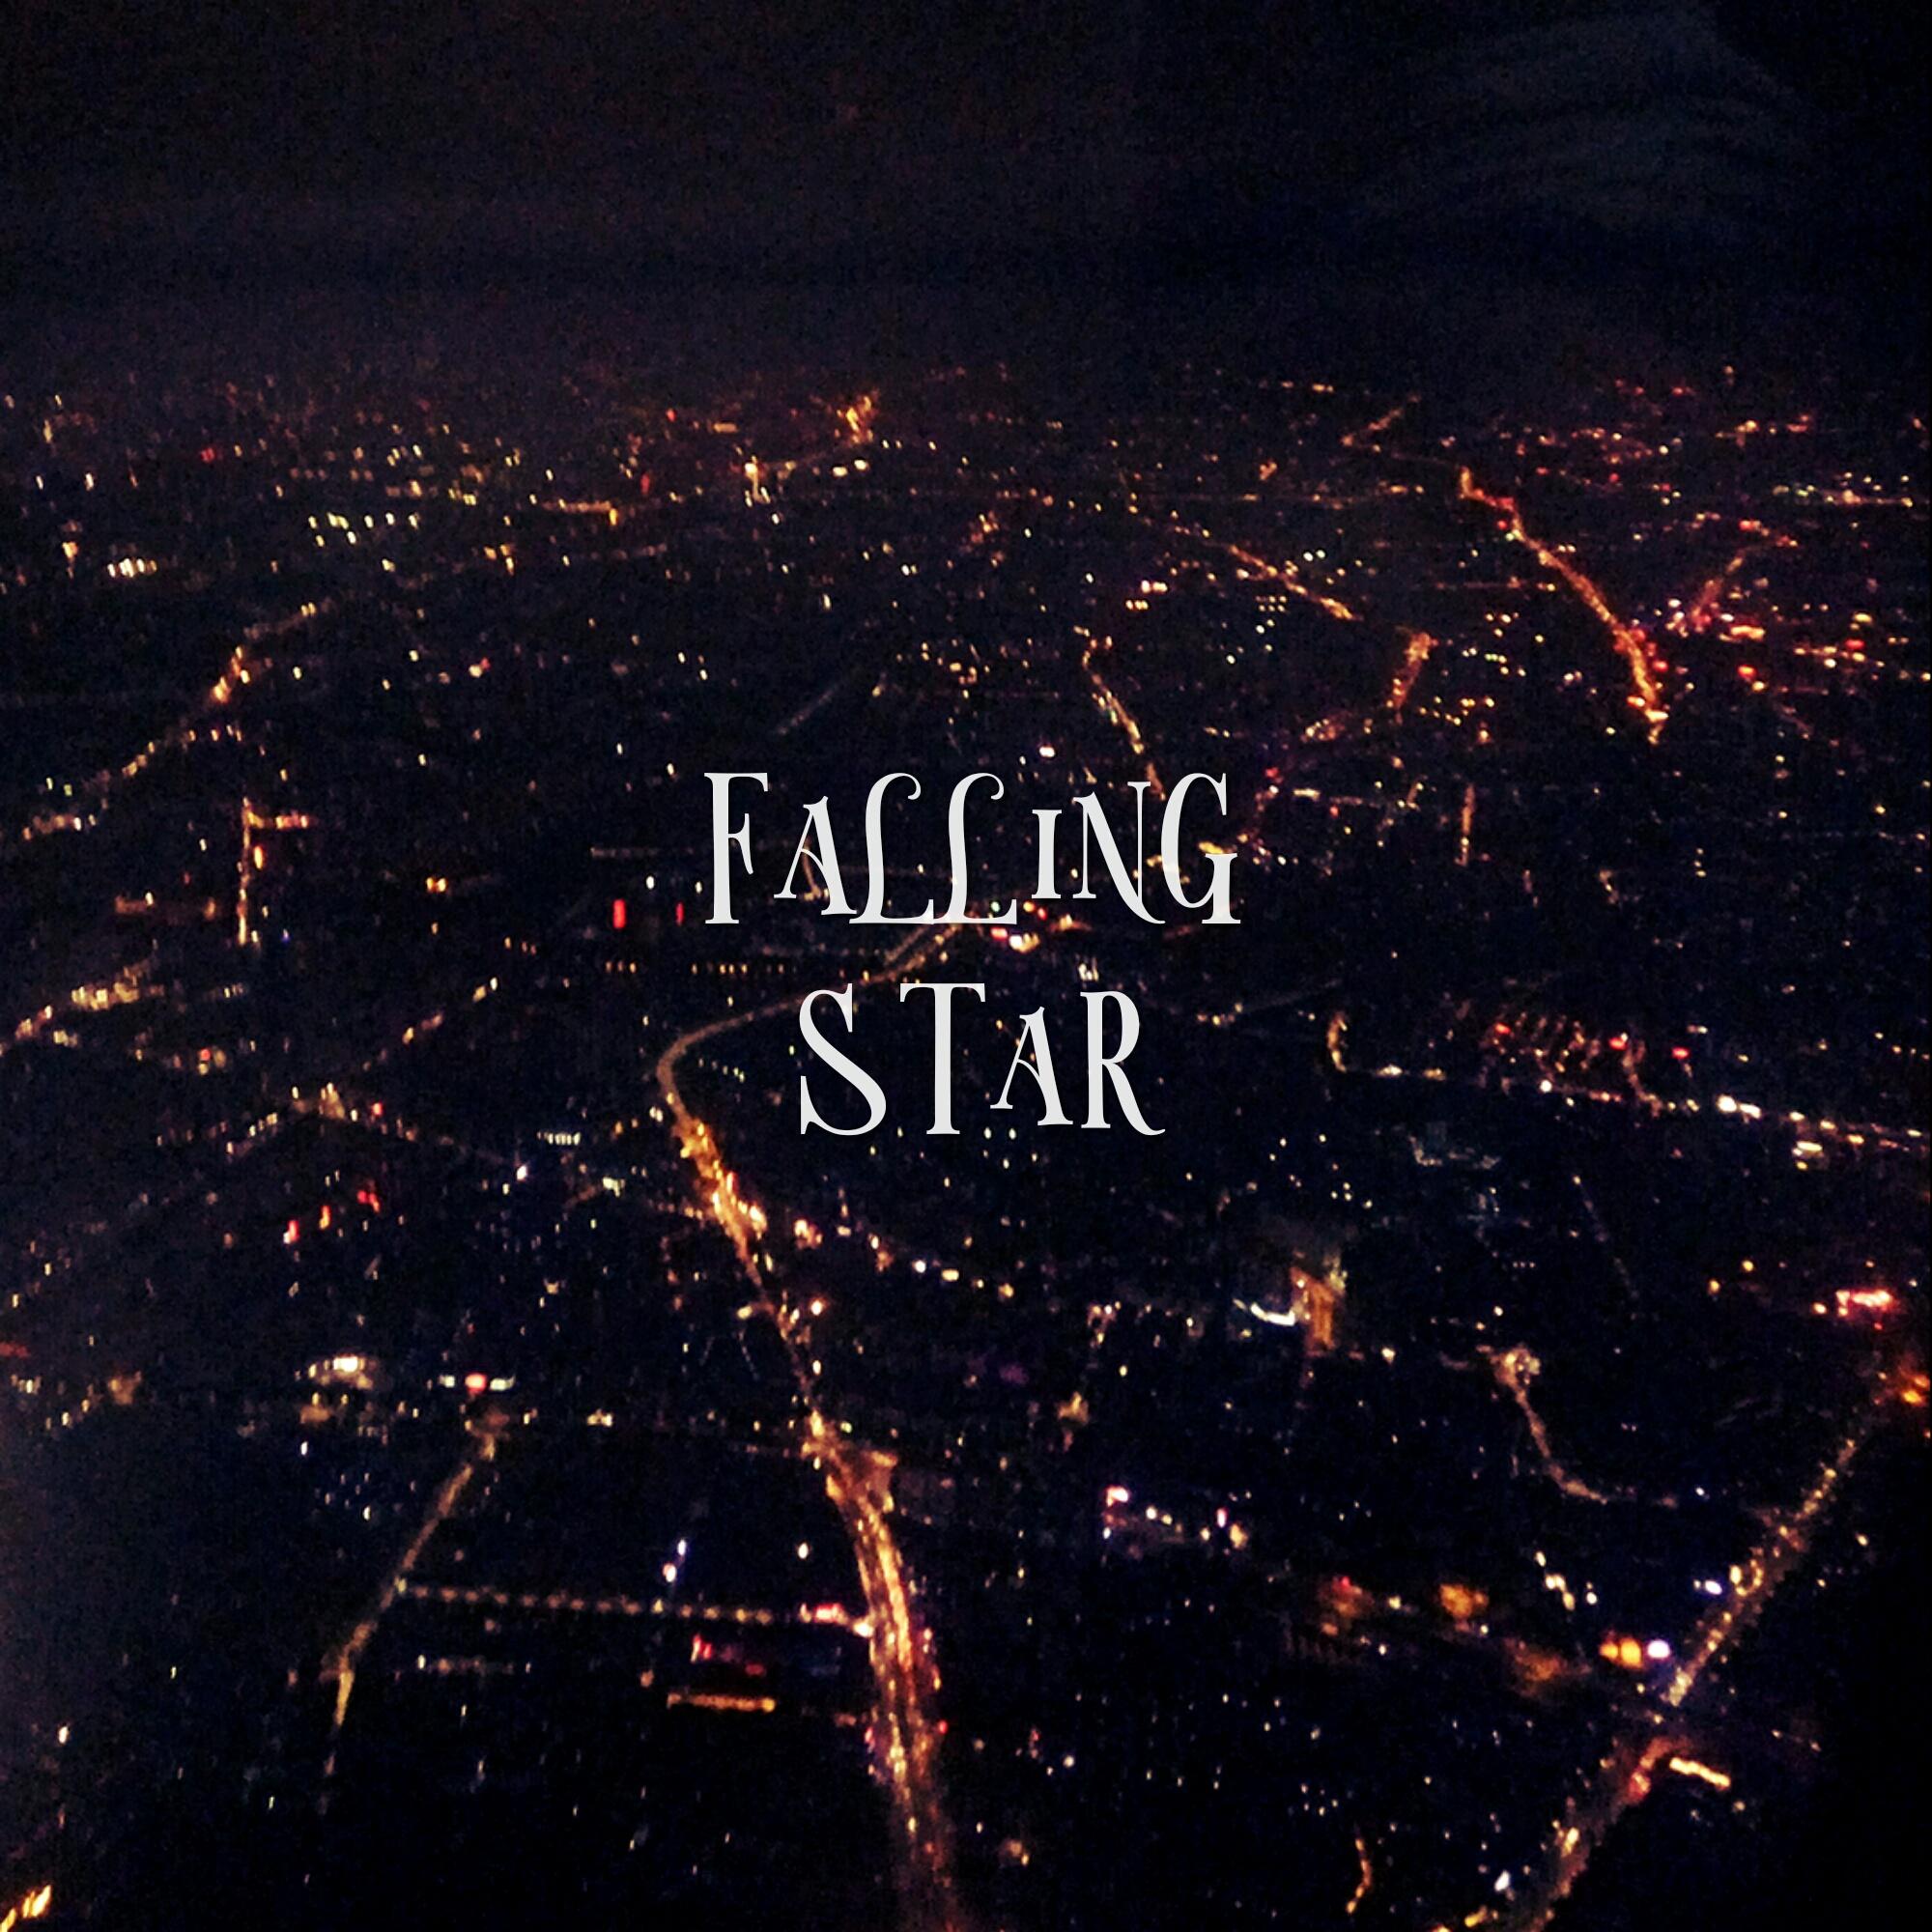 fallingstar